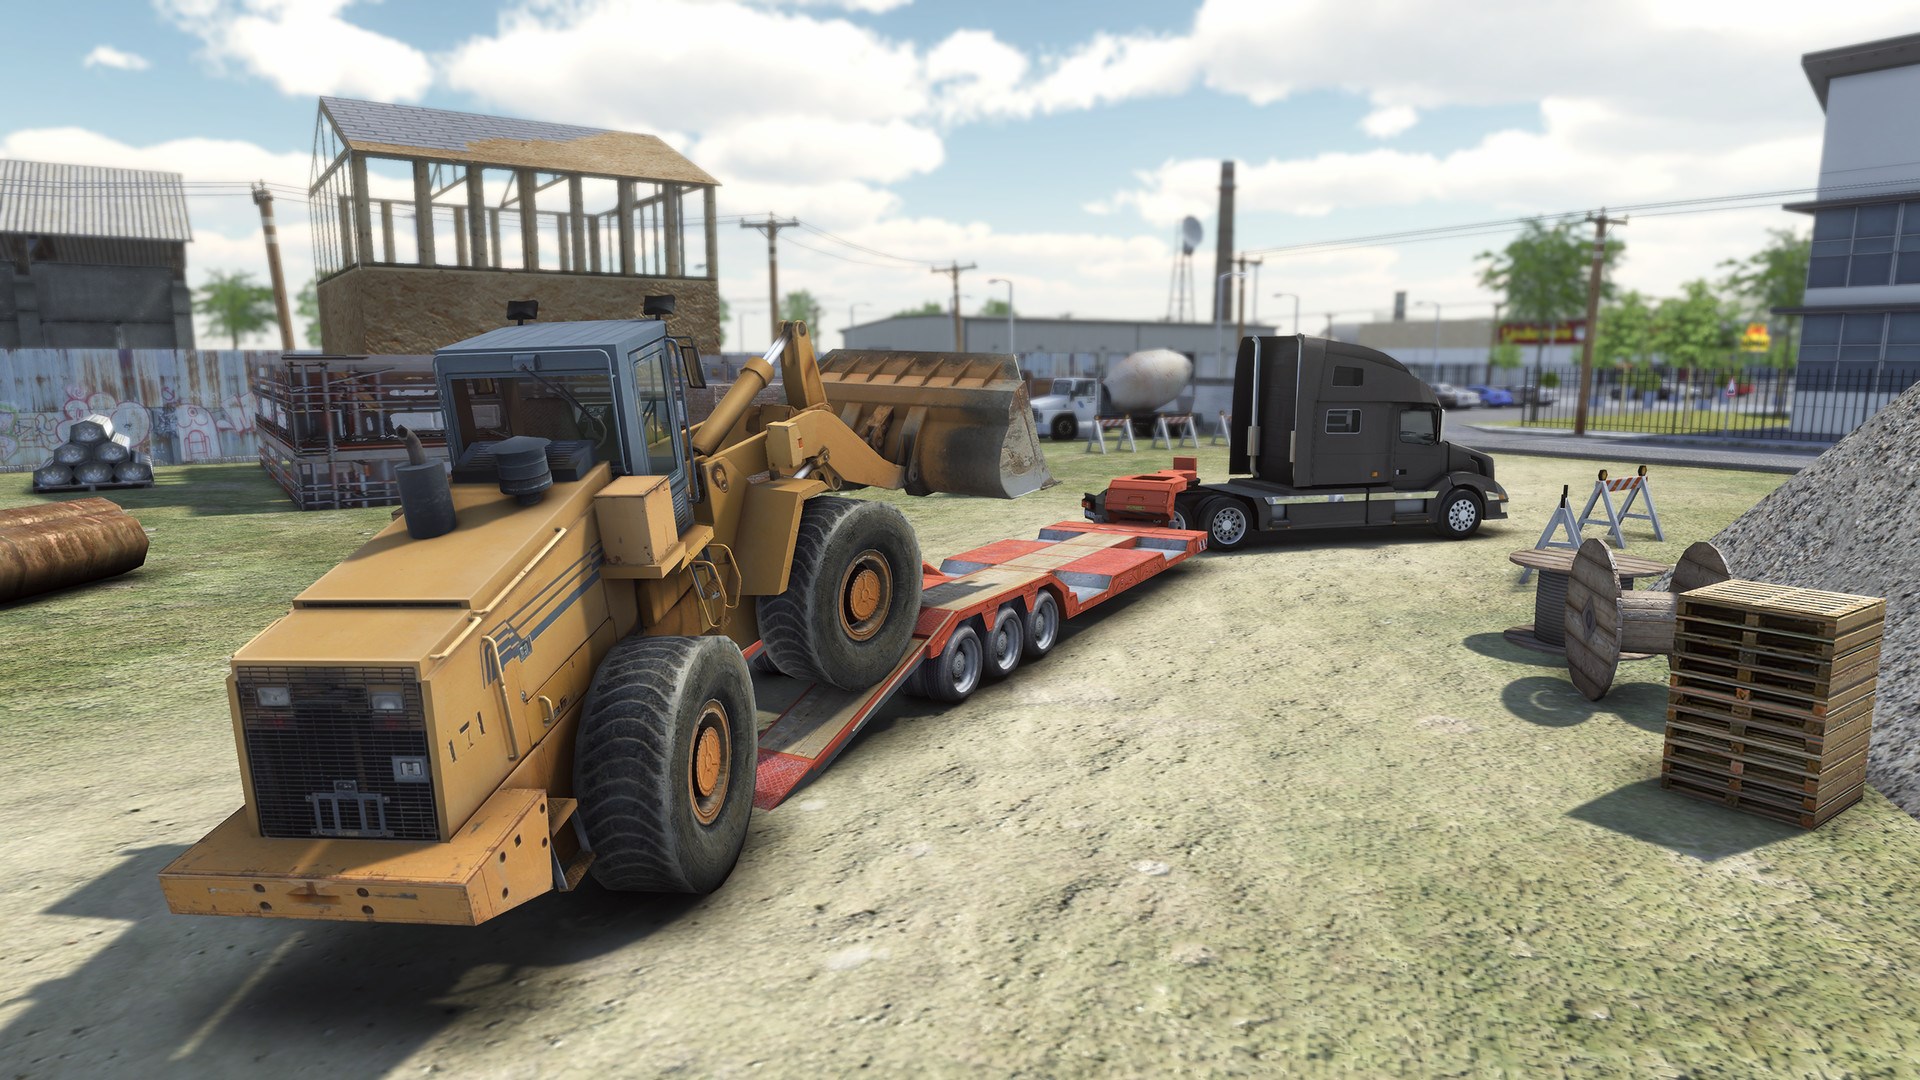 Türk yapımı simülasyon oyunu Truck and Logistics Simulator çıktı